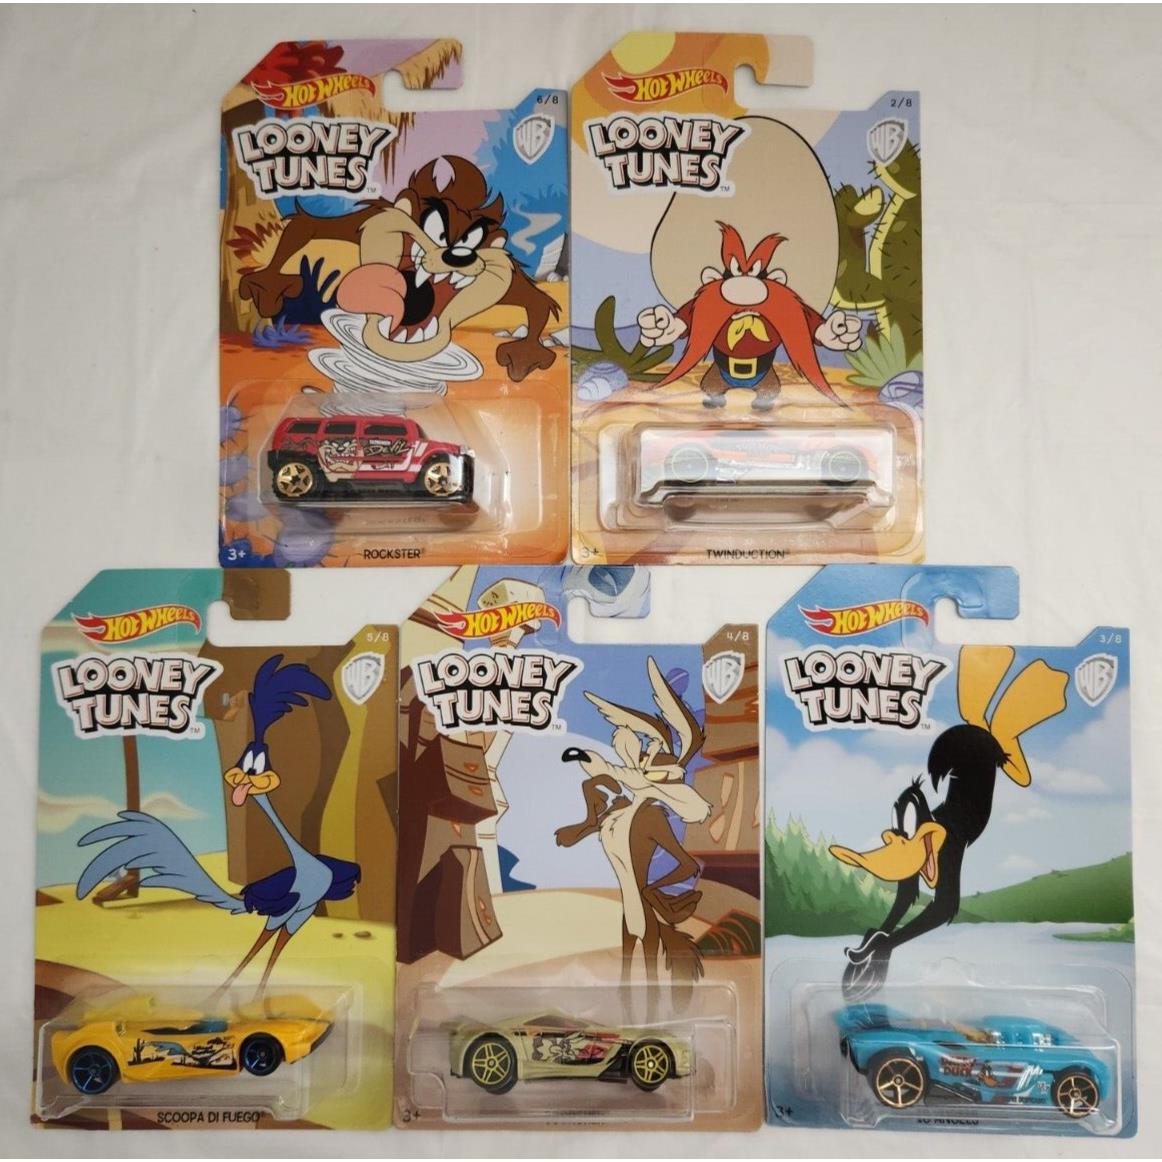 Hot Wheels 2017 Looney Tunes Complete Set of 5 Cars FKC68